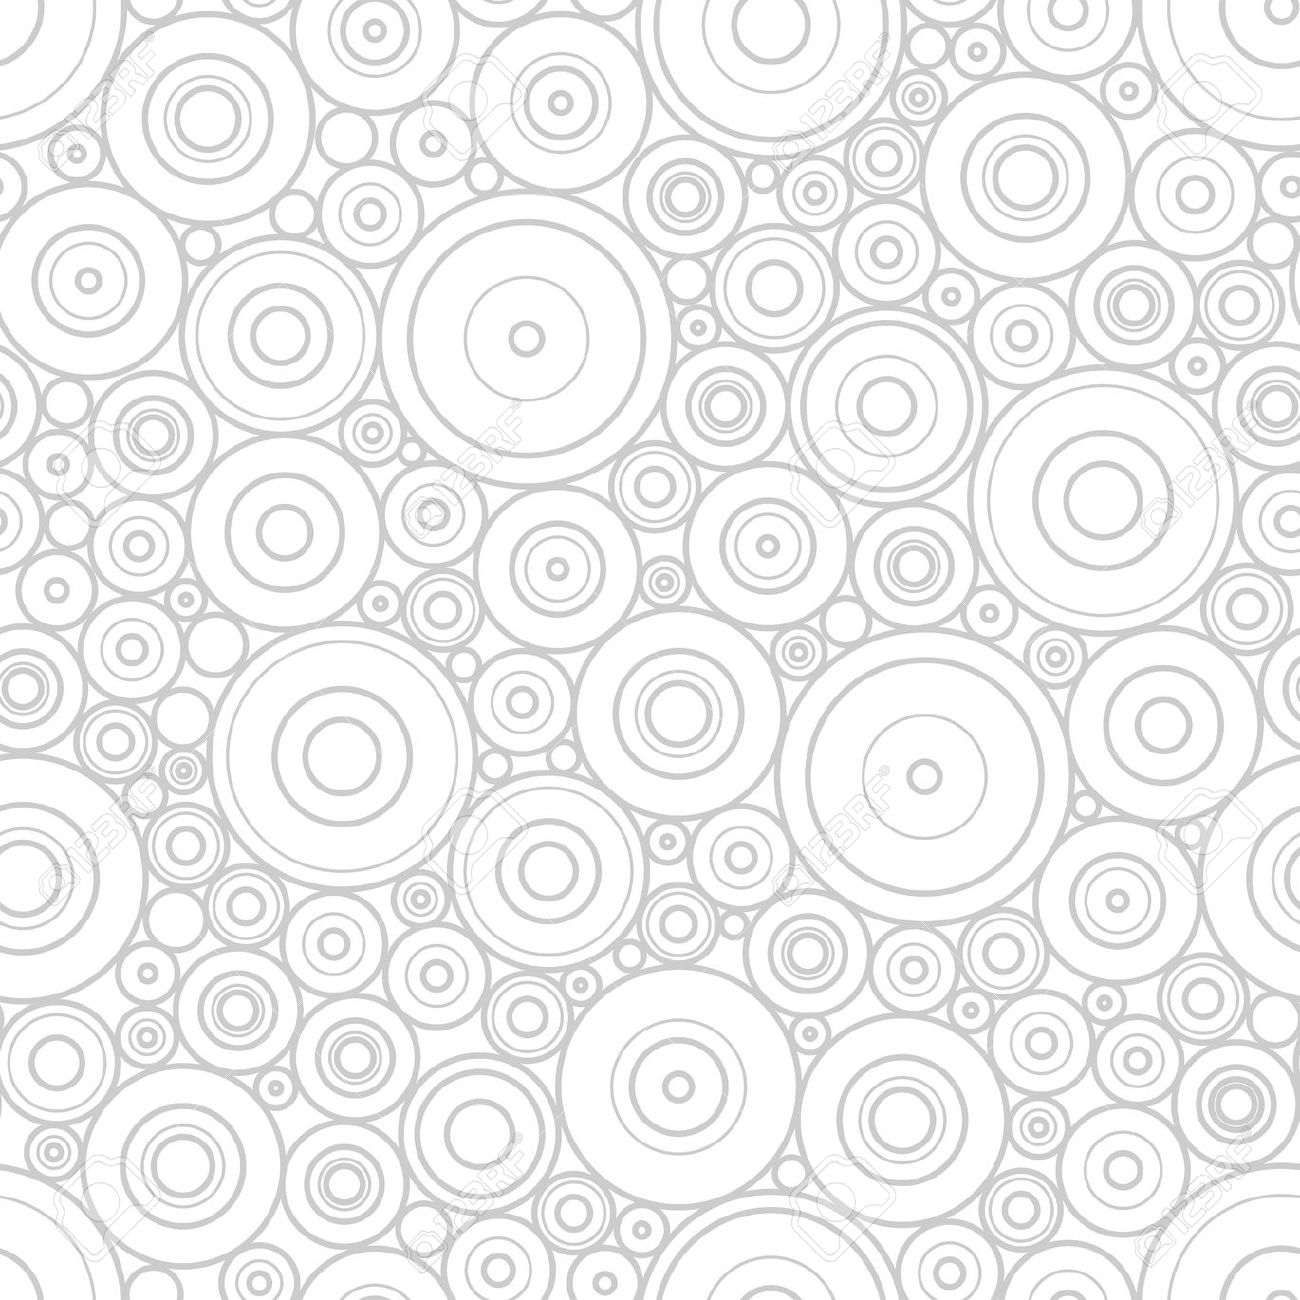 Pattern HD wallpapers, Desktop wallpaper - most viewed